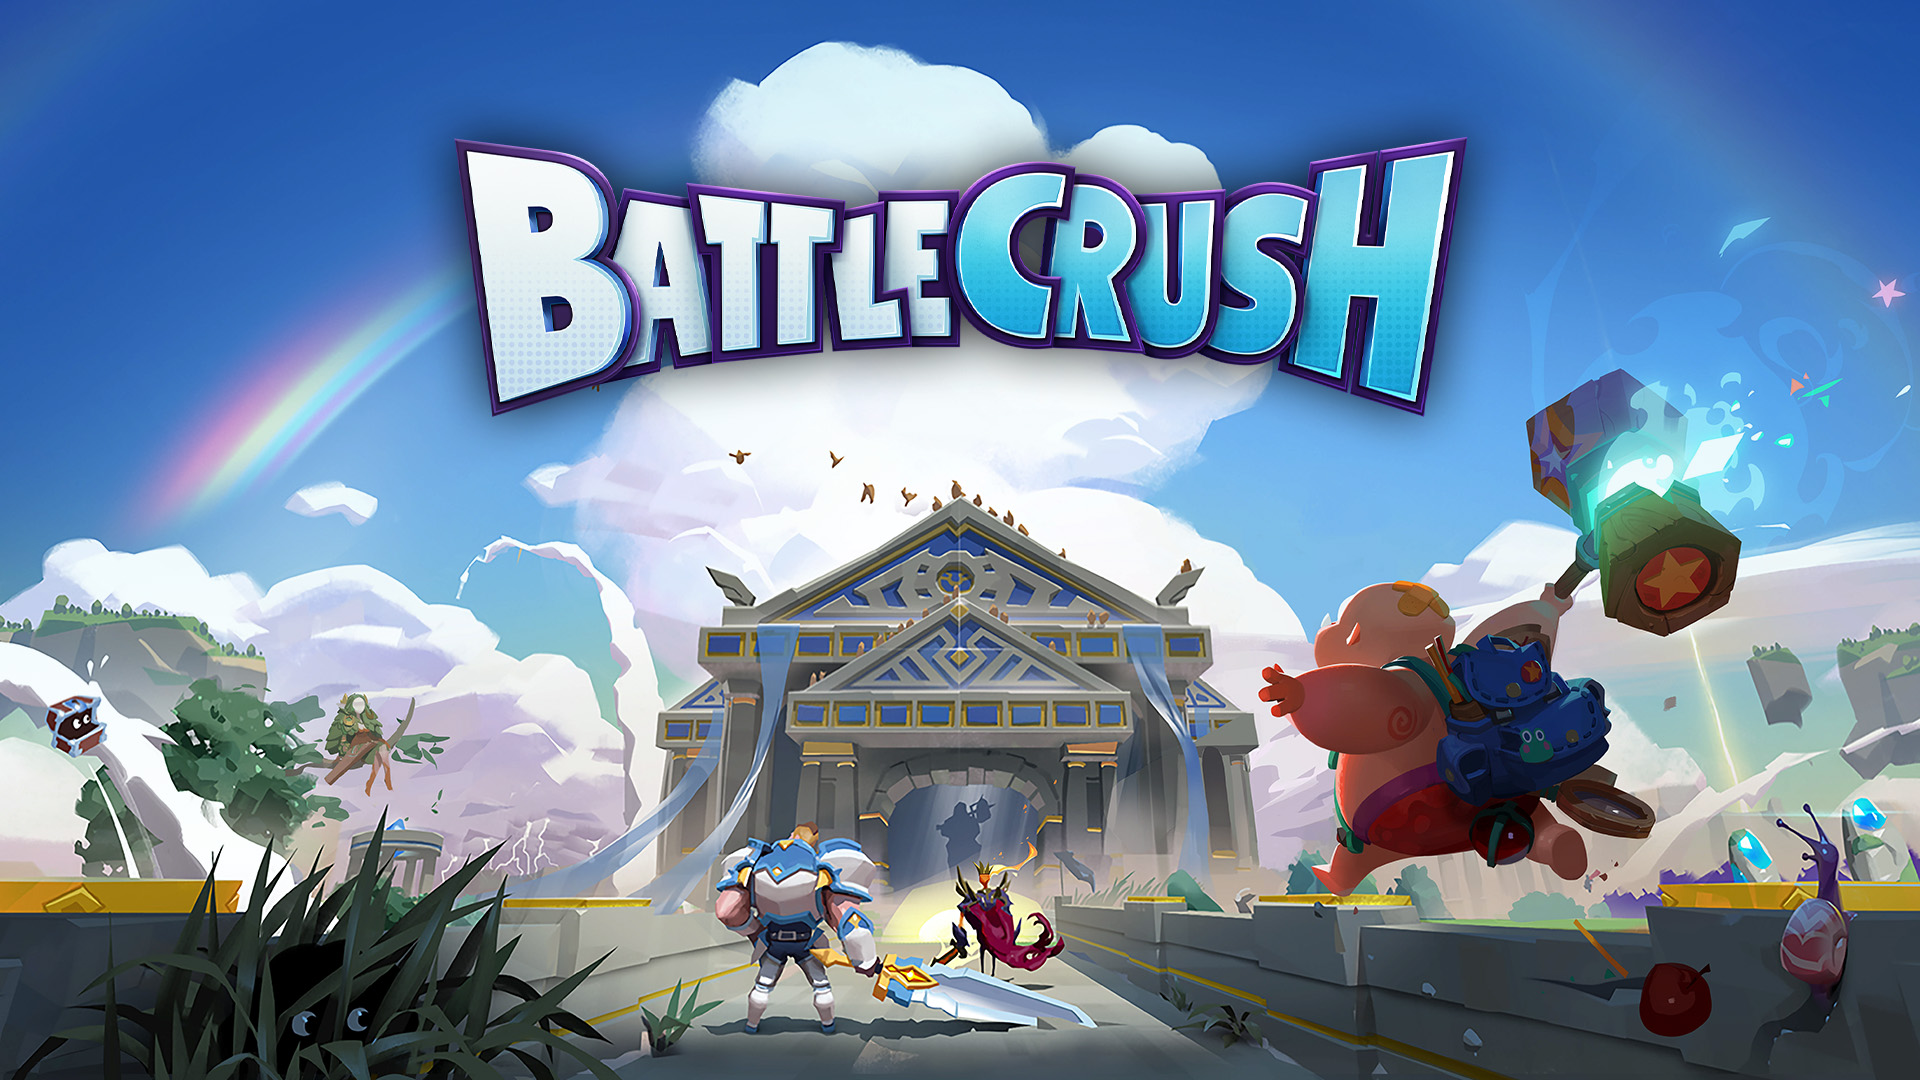 NCSOFT announces Battle Crush, a new multiplayer battling game